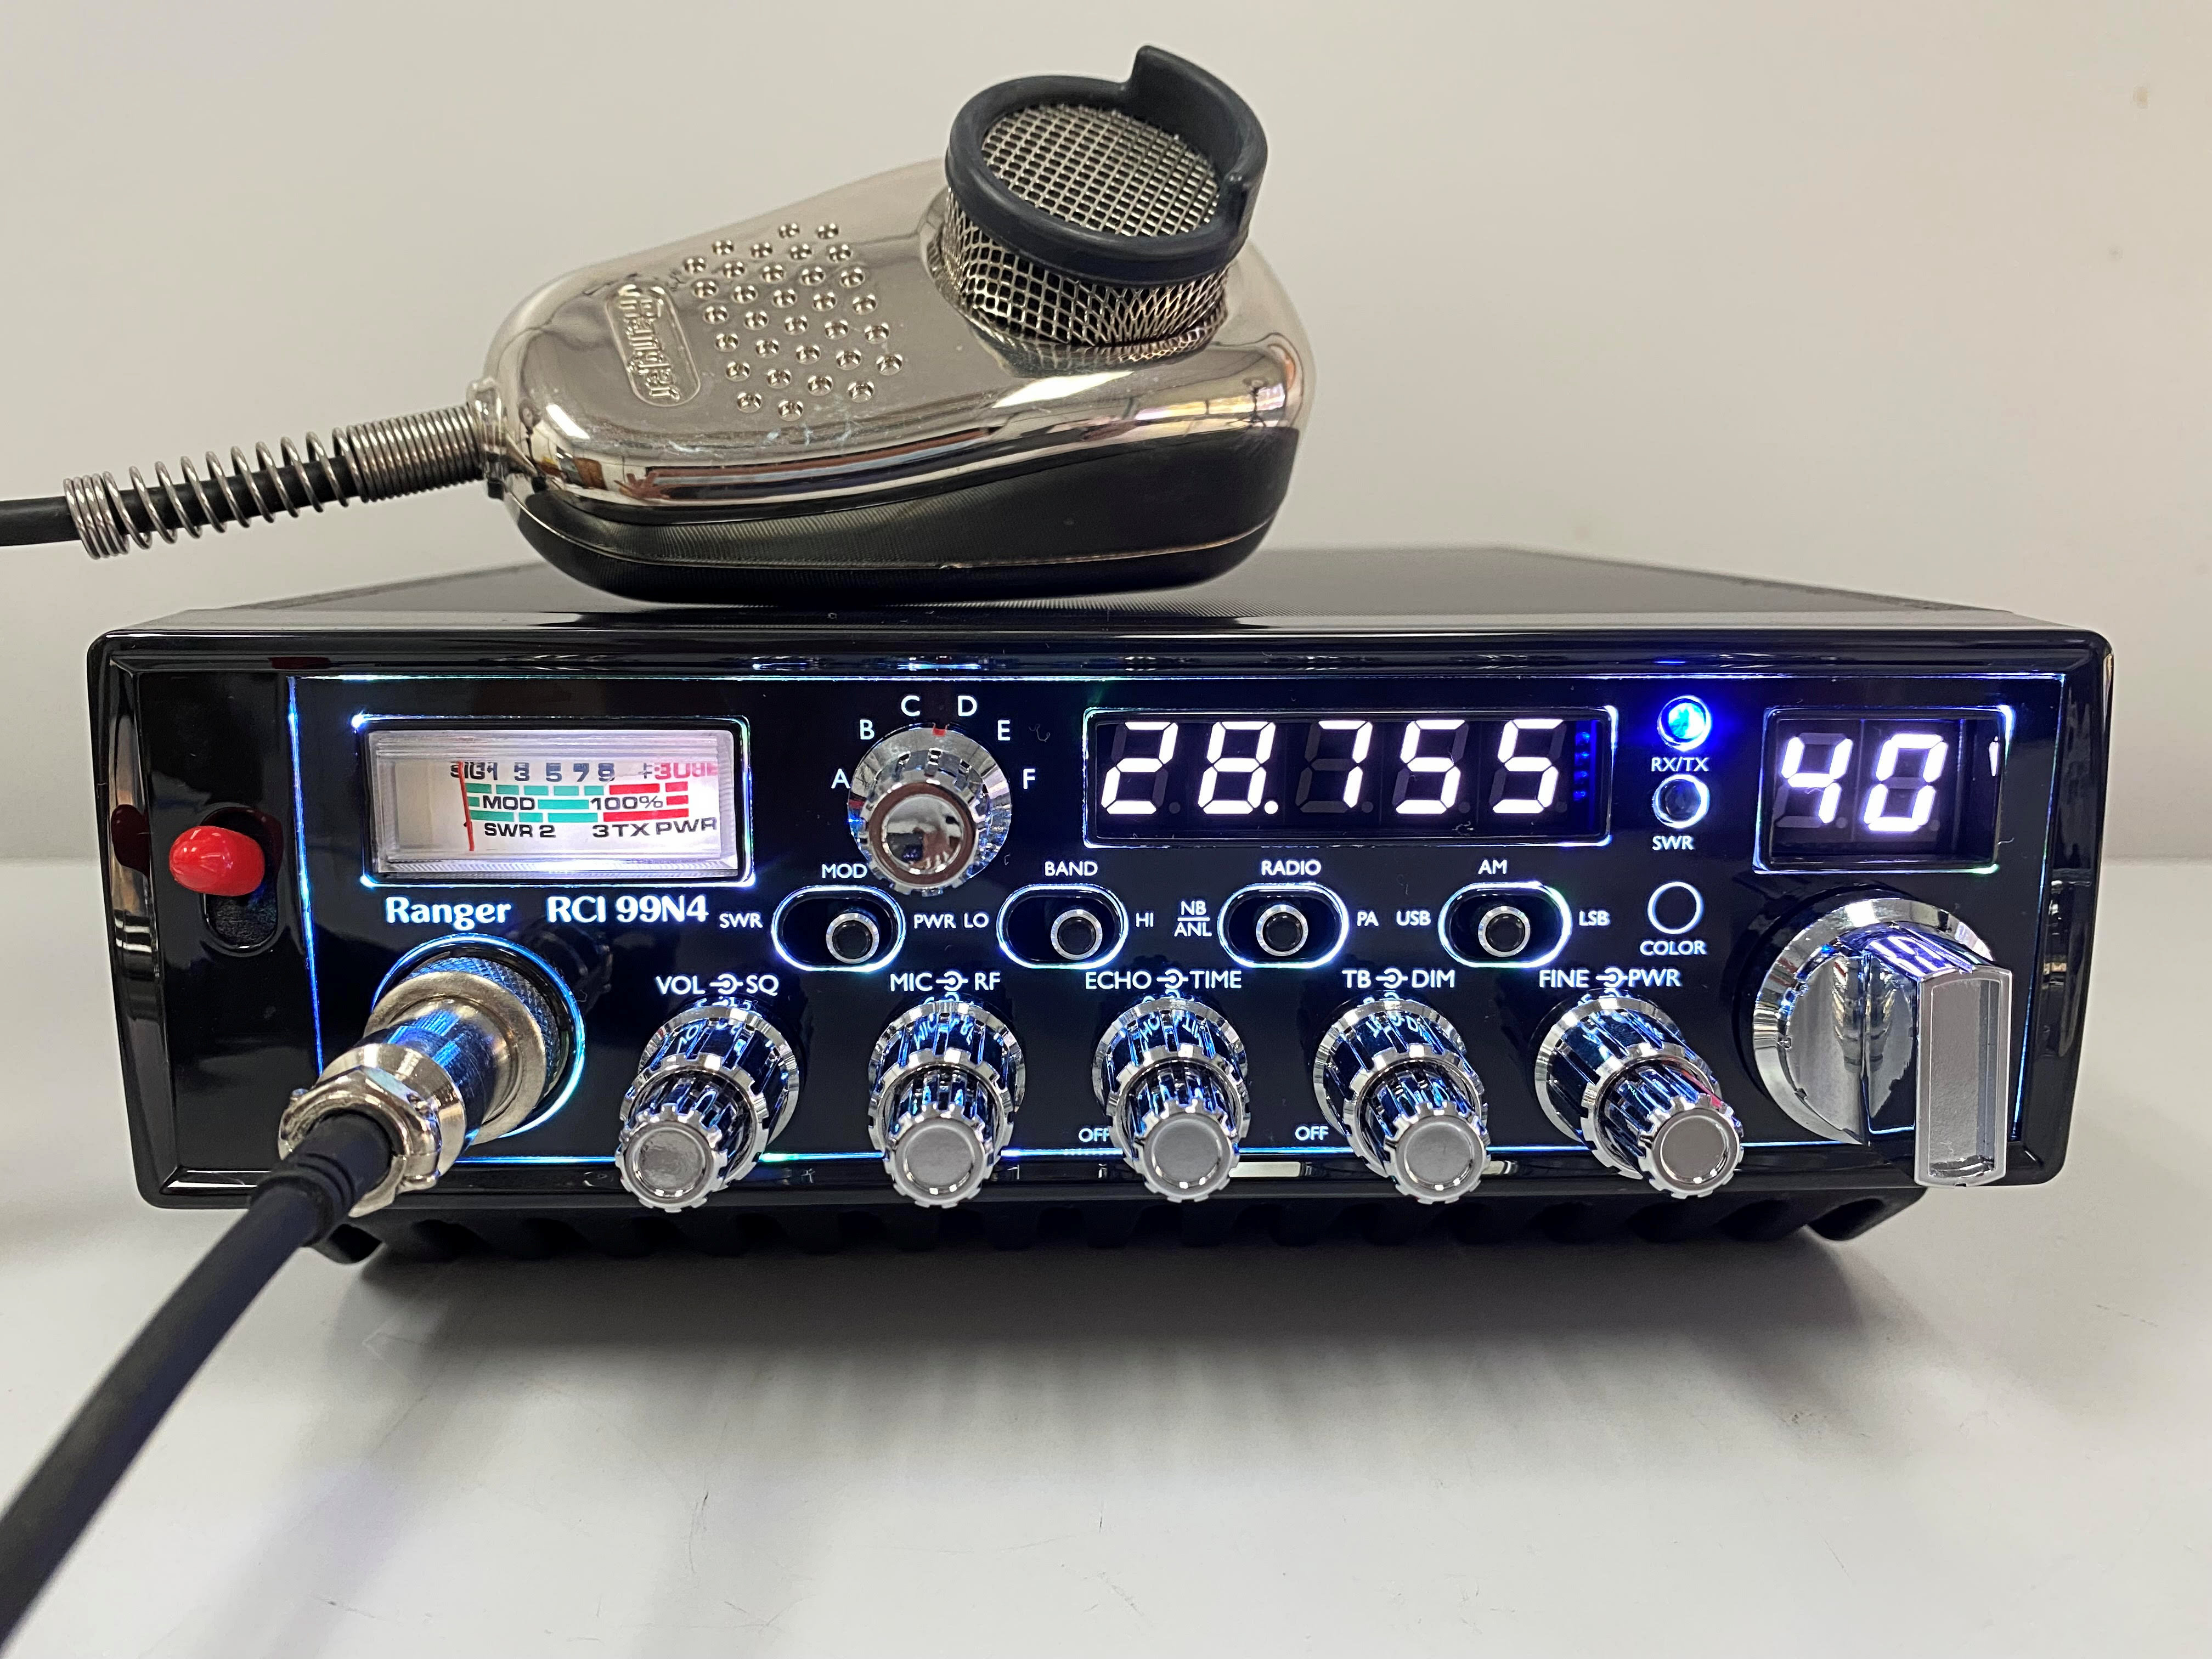 Ranger RCI-99N4 - 10 Meter Amateur Radio